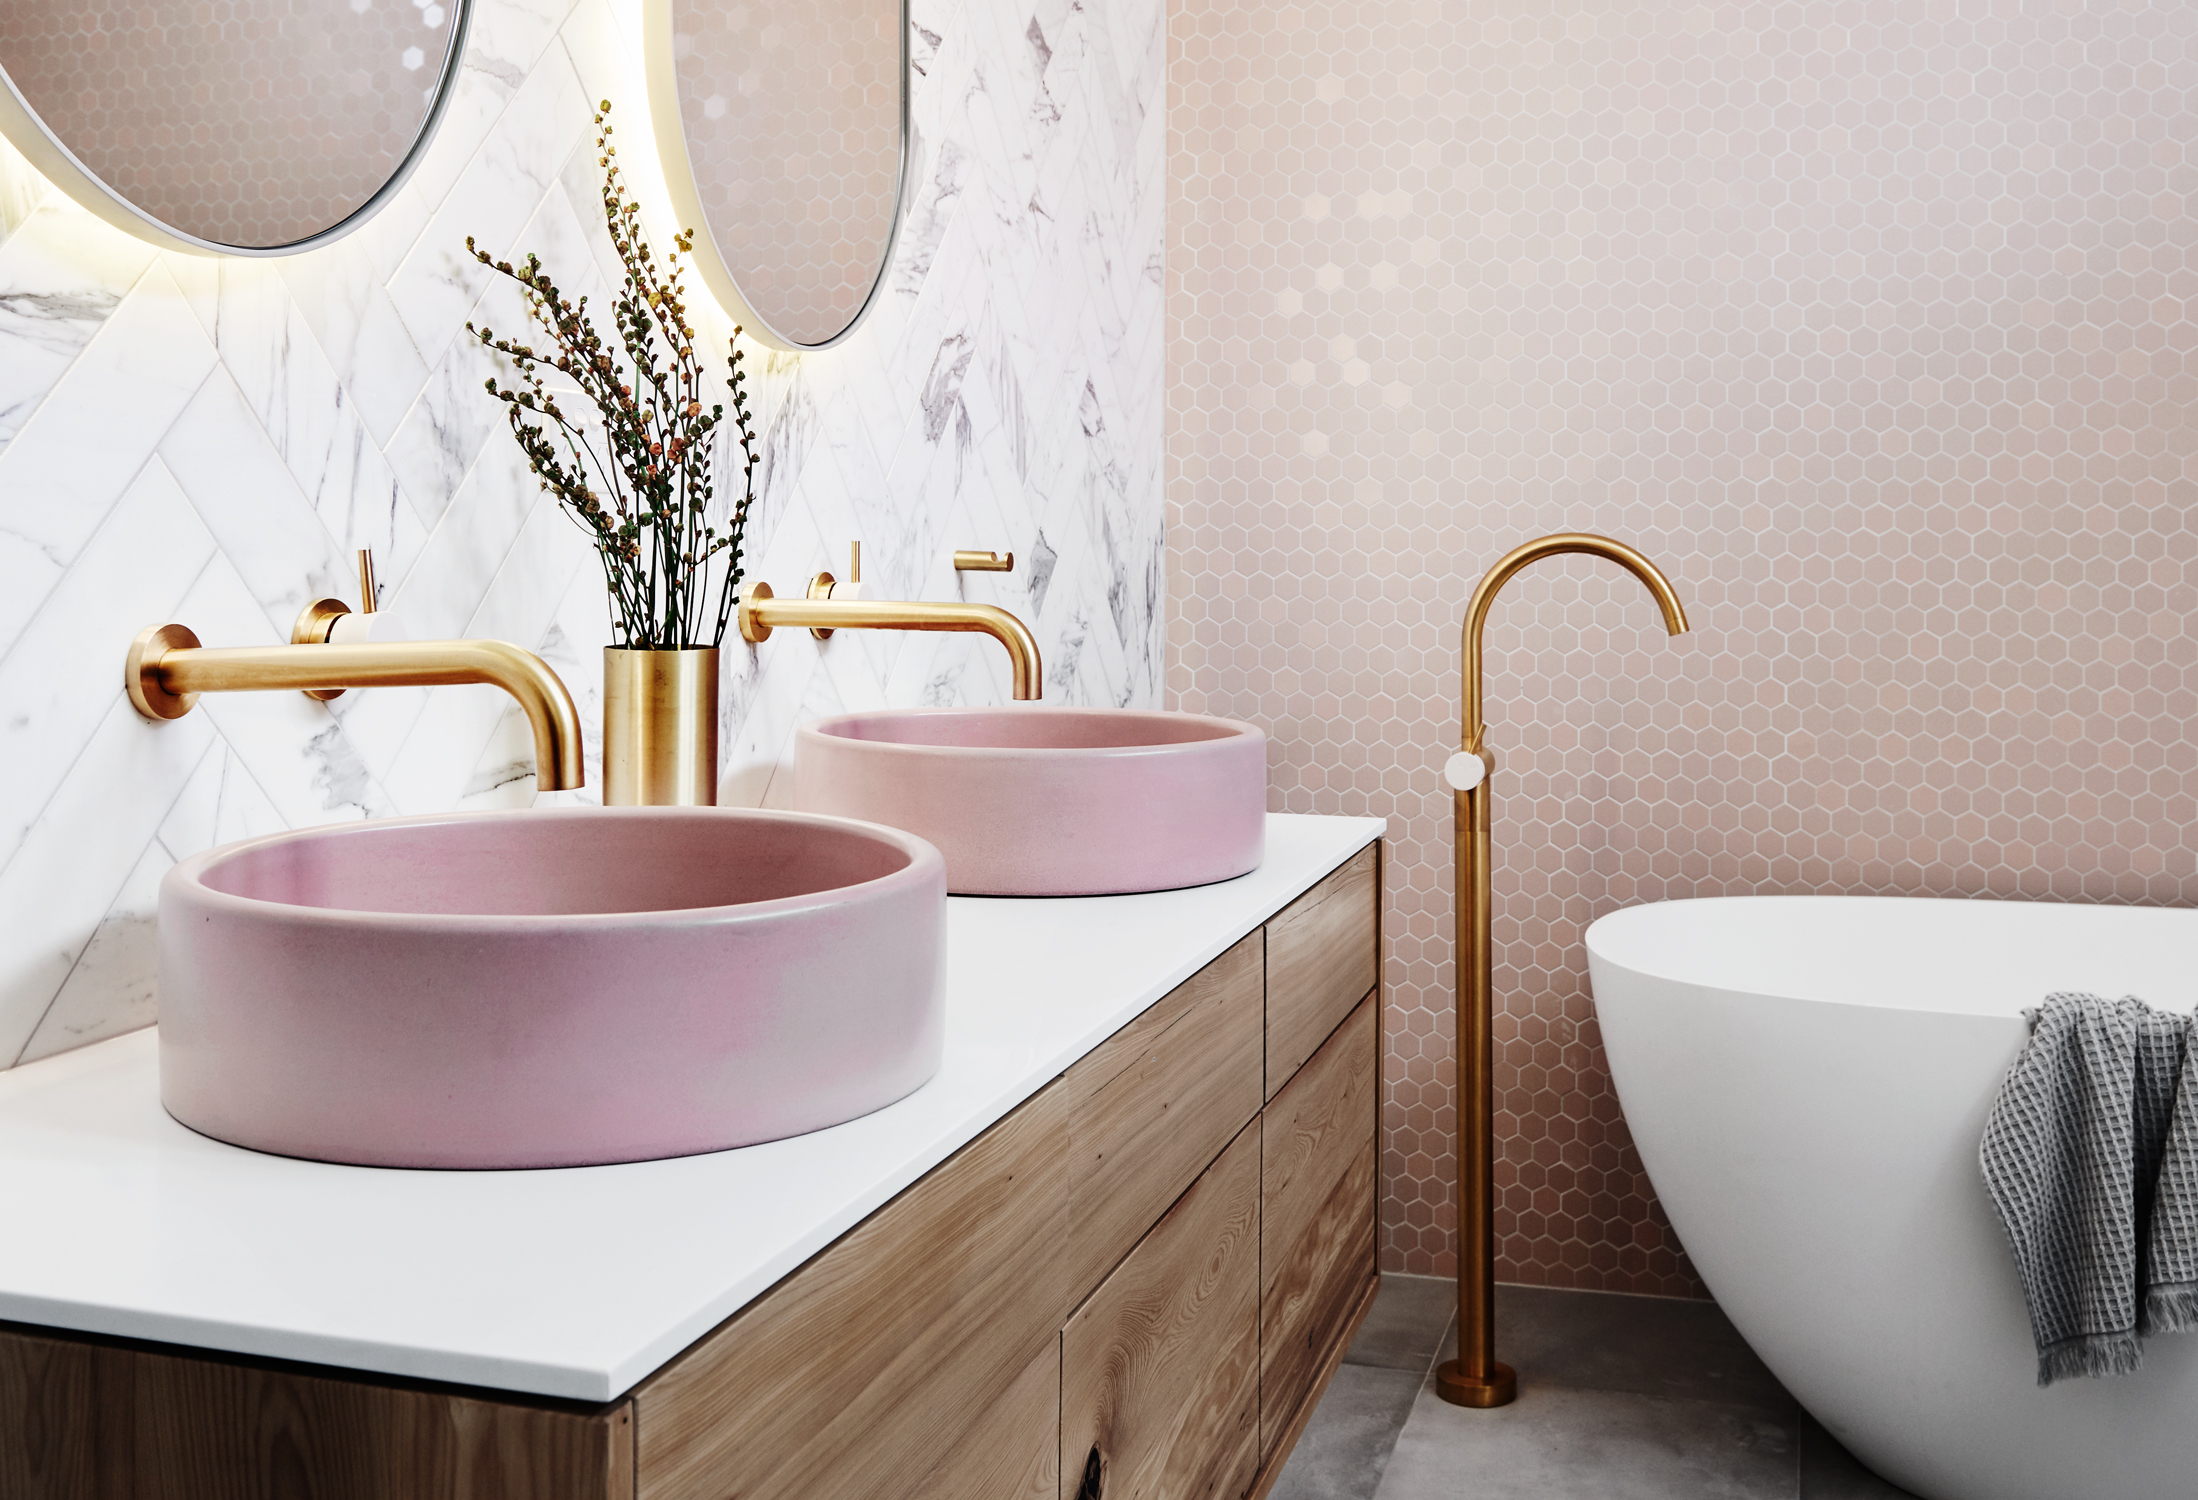 Bathroom Color Ideas We Love For 2021, Small Bathroom Paint Colors 2021